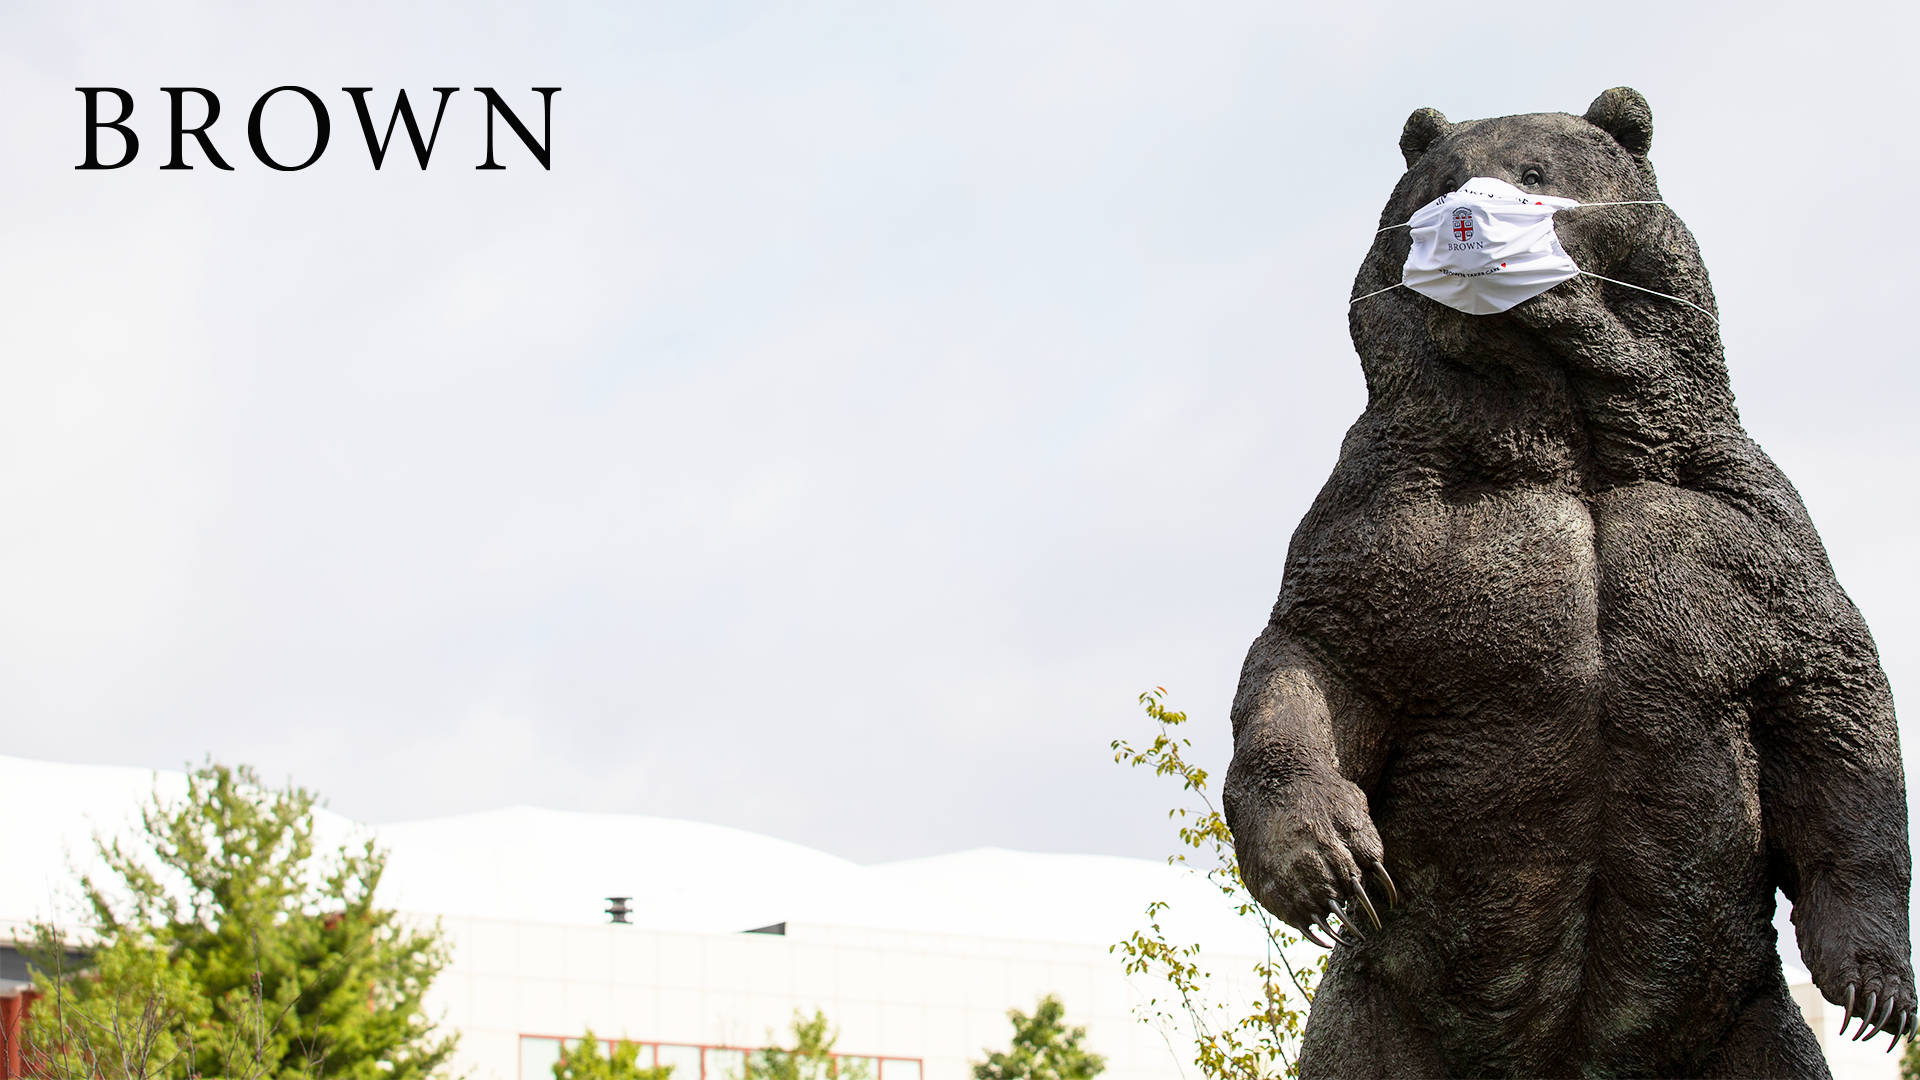 Majestic Brown Bear Statue at Brown University Wallpaper